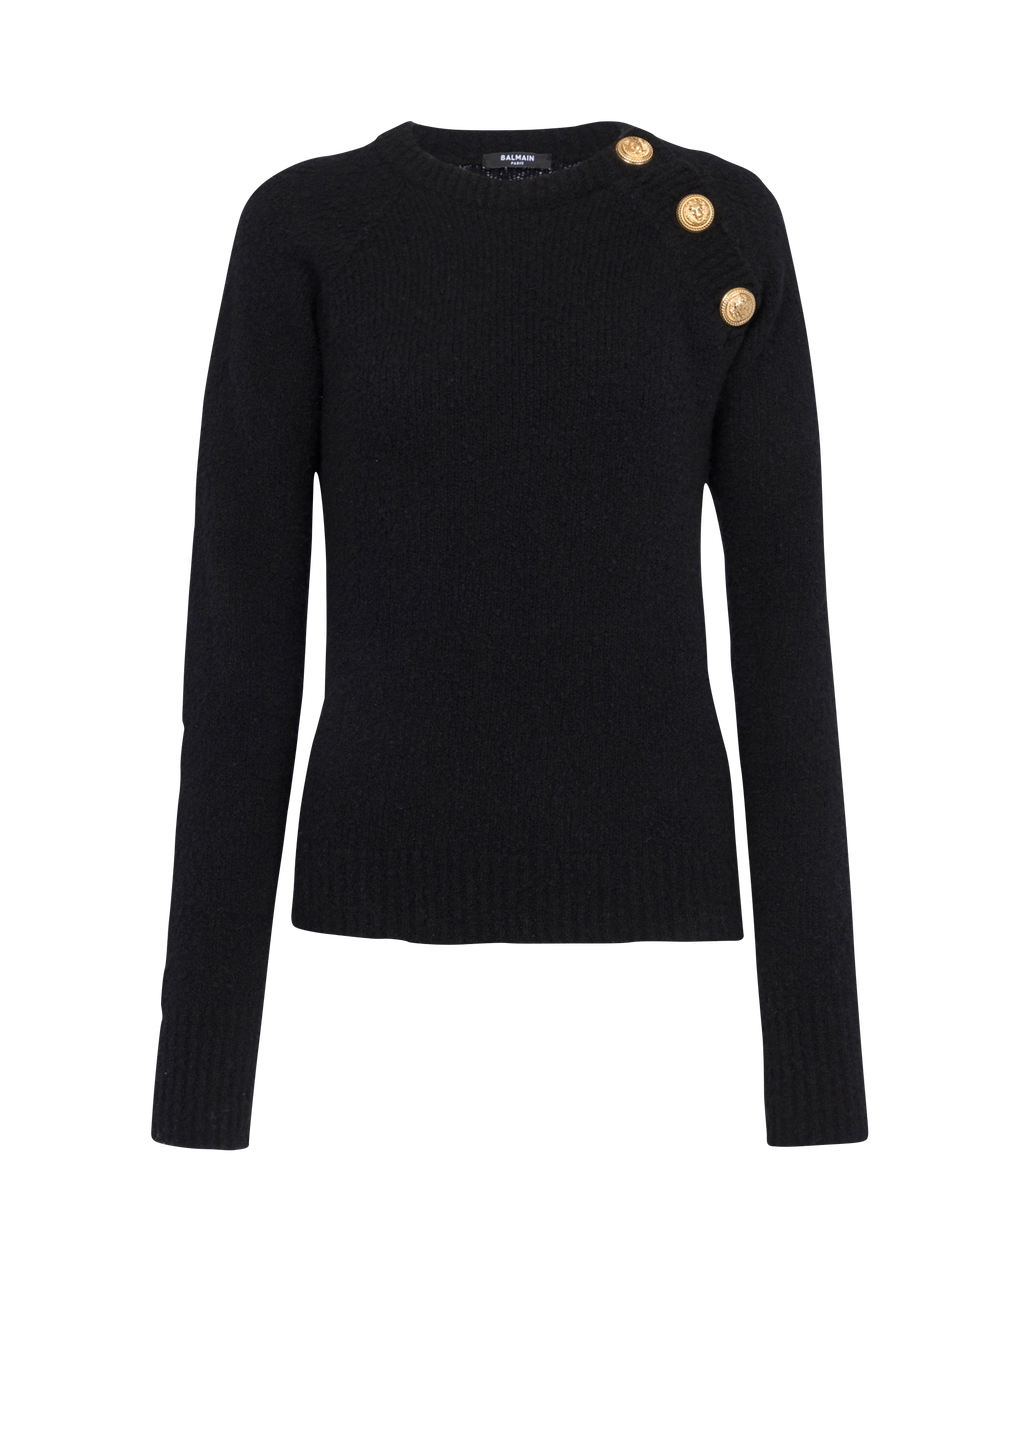 Cashmere sweater, black, hi-res